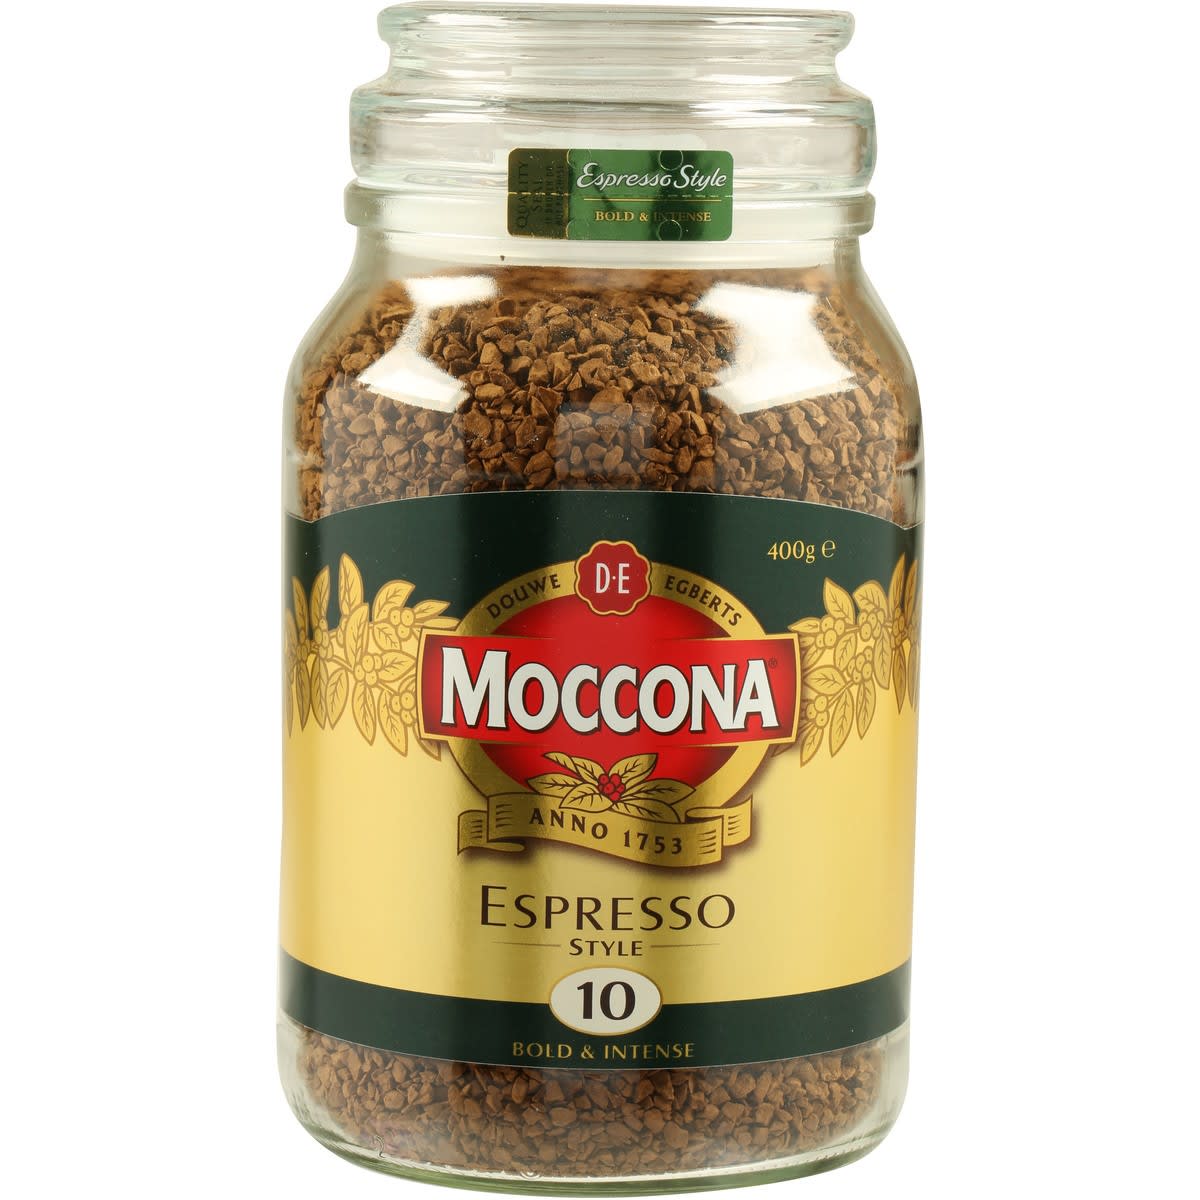 Moccona Espresso Coffee_1